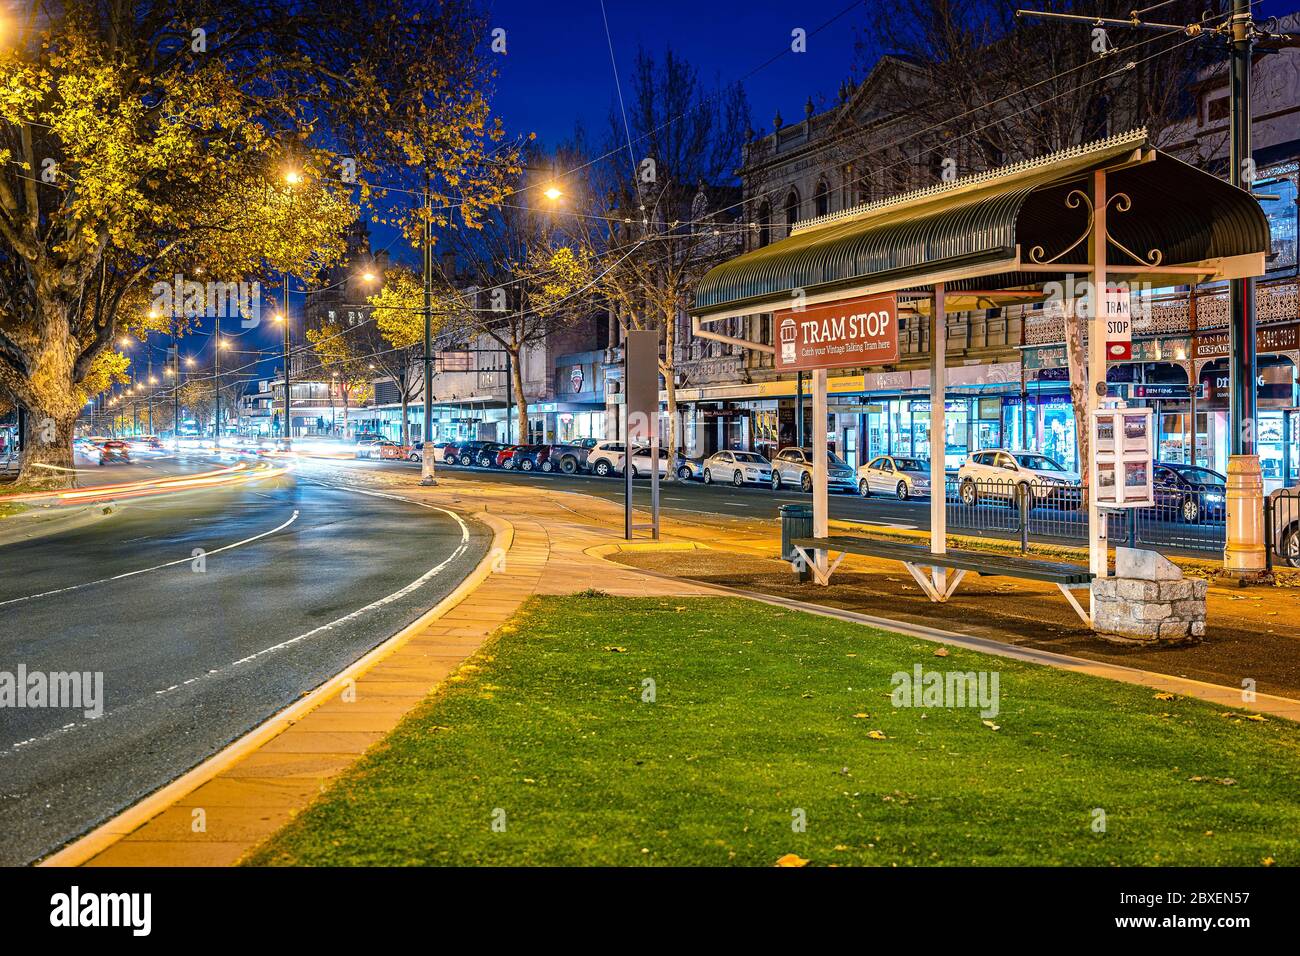 Bendigo, Victoria, Australia - Tram stop to board a vintage town tram Stock Photo